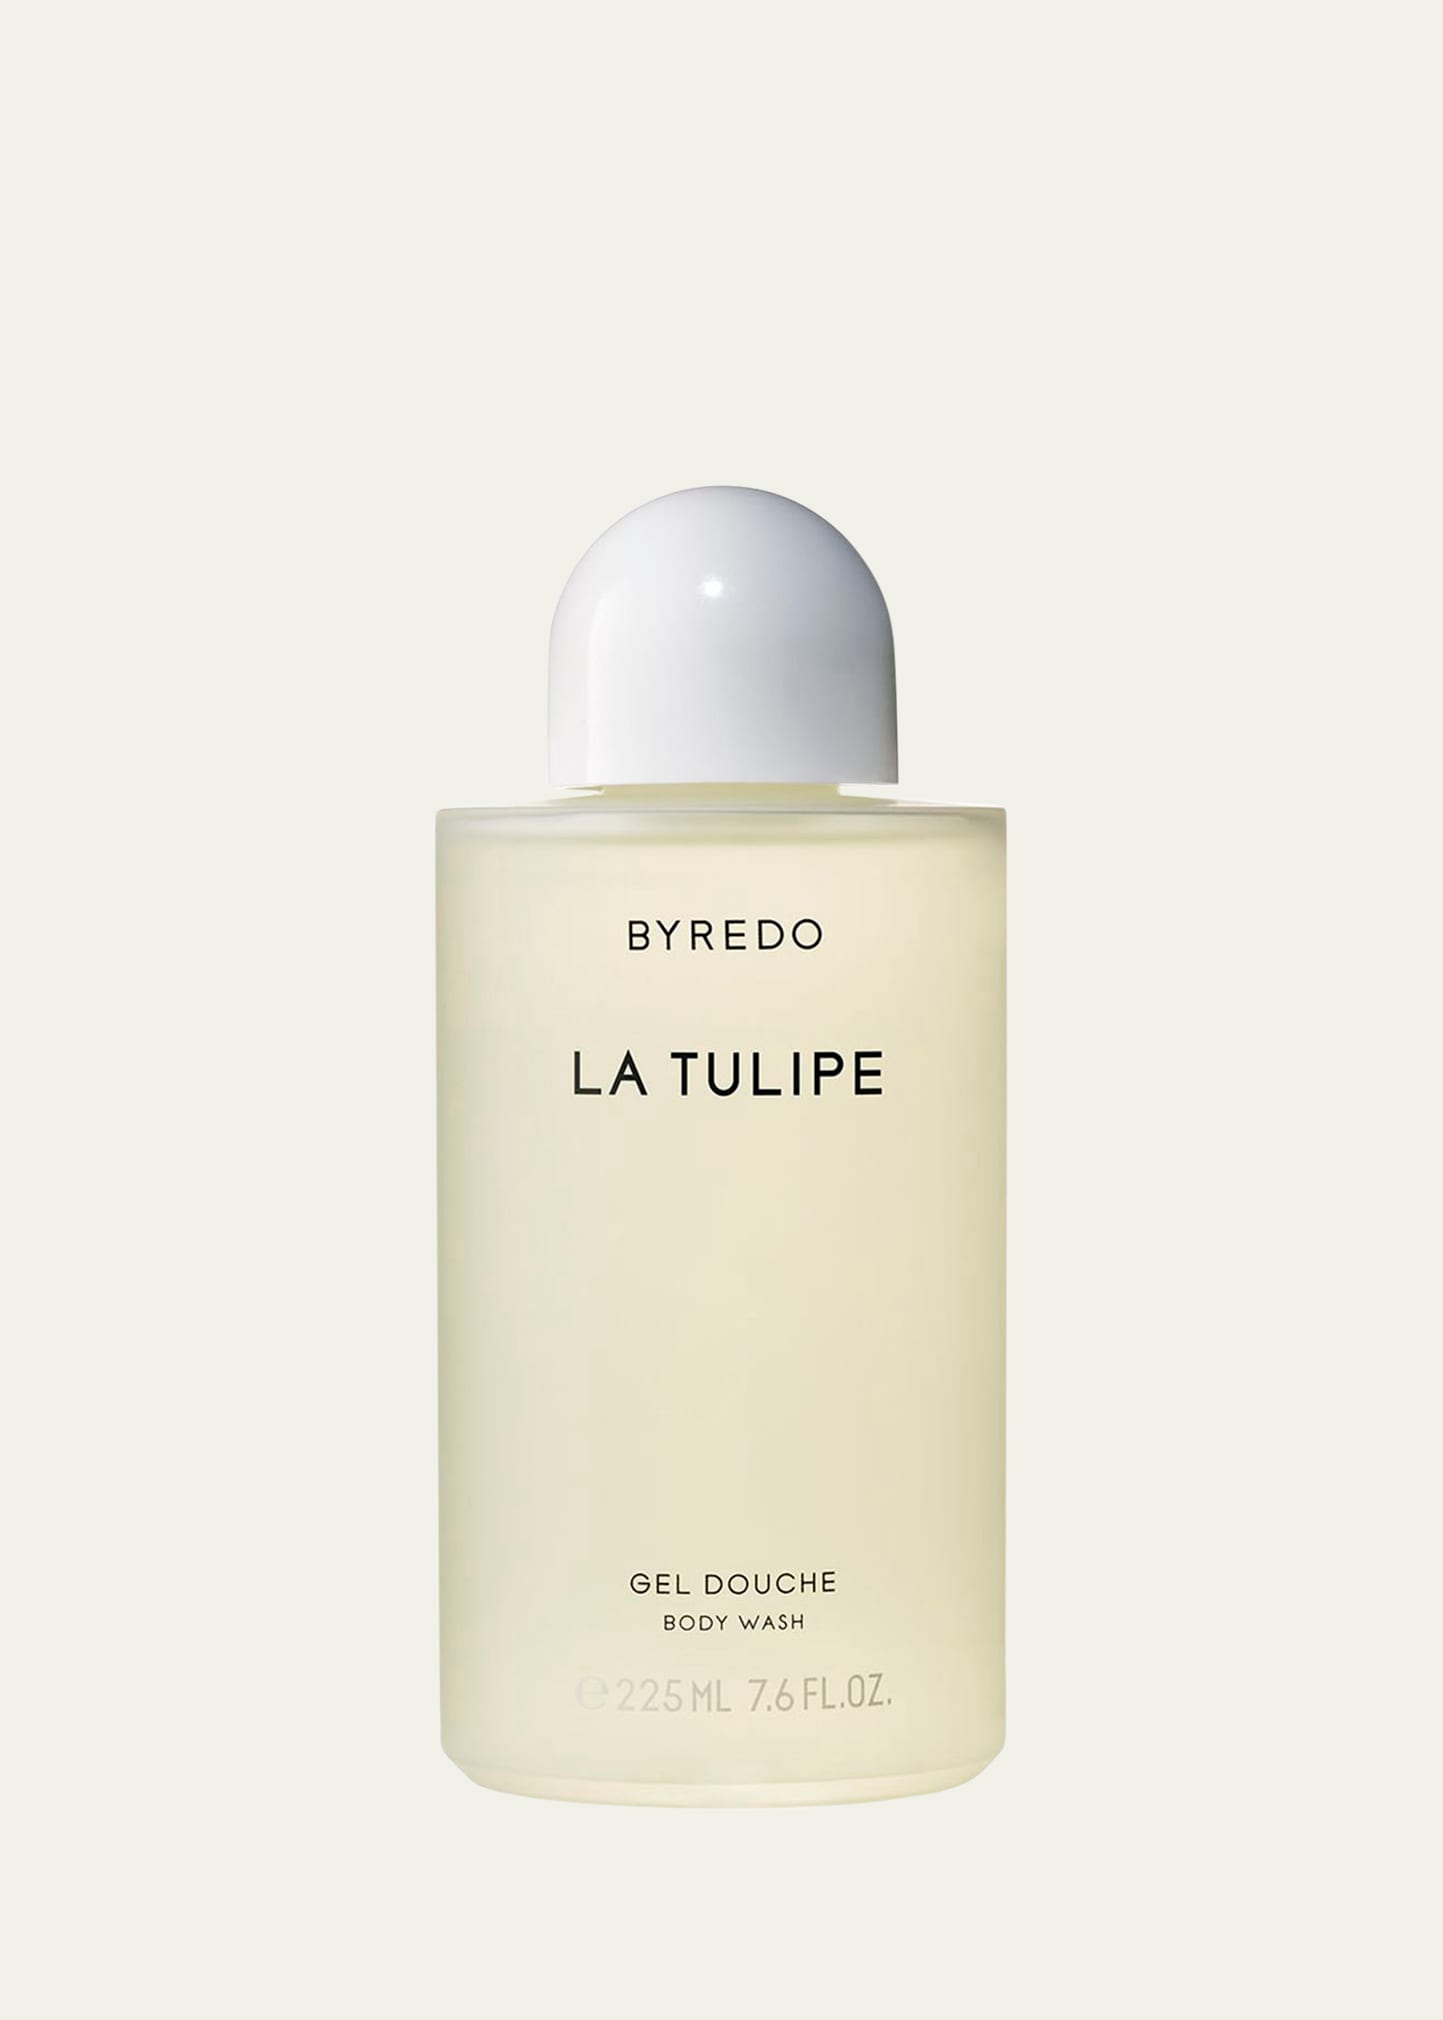 La Tulipe Body Wash, 7.6 oz.